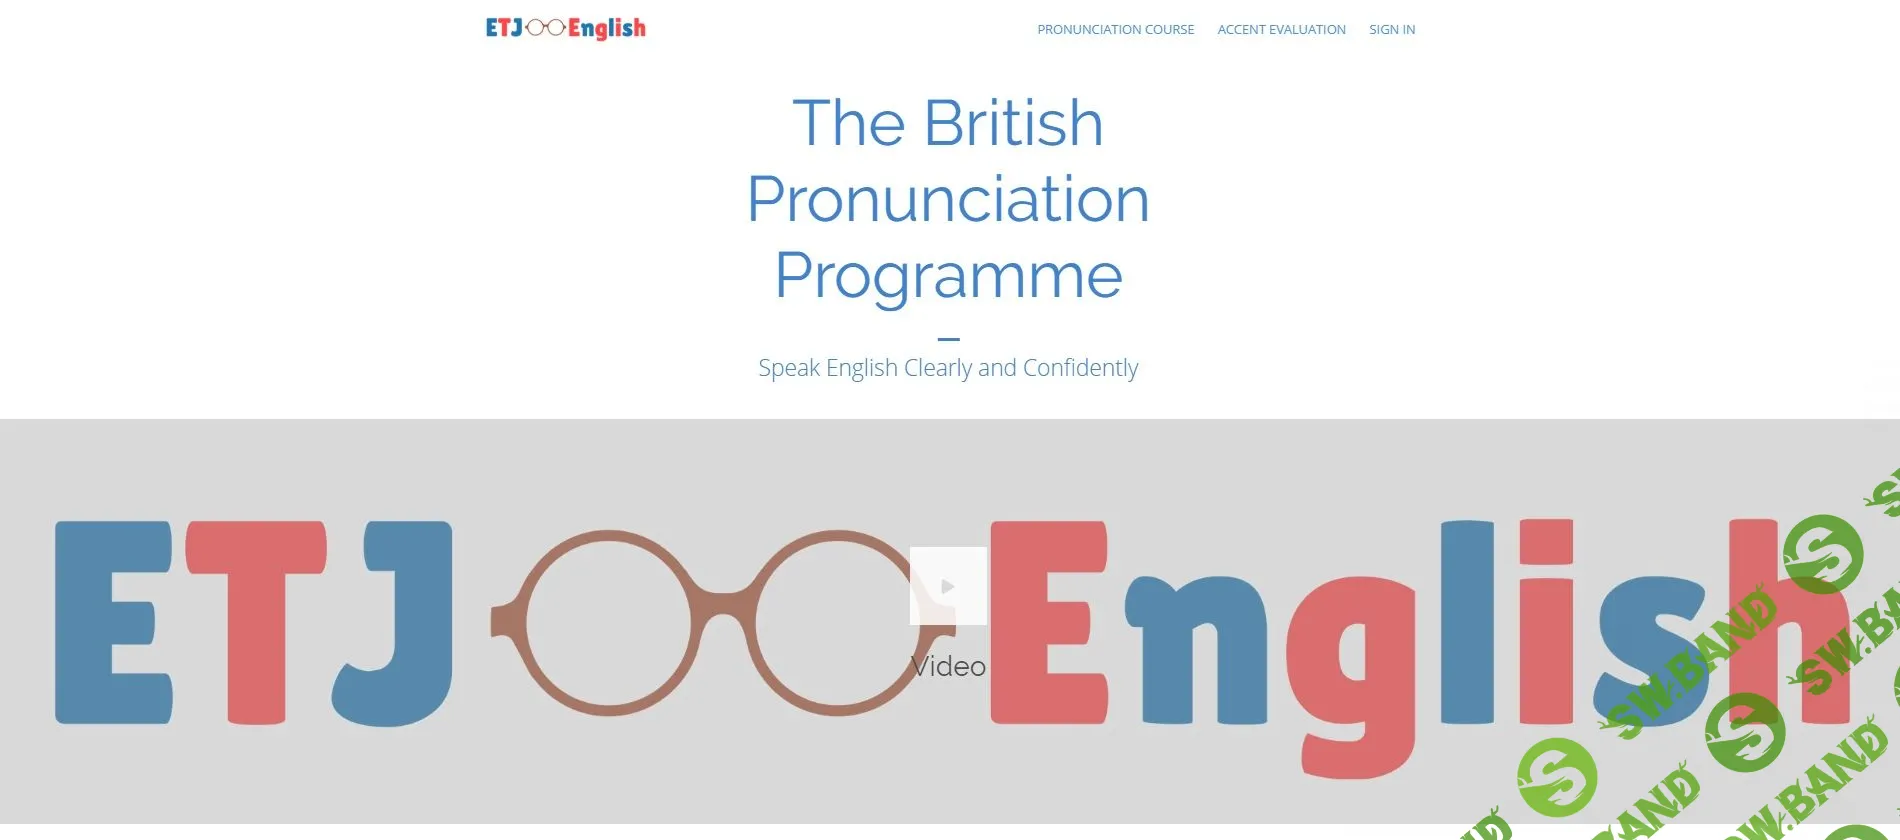 [ETJ English] The British Pronunciation Programme (2020)